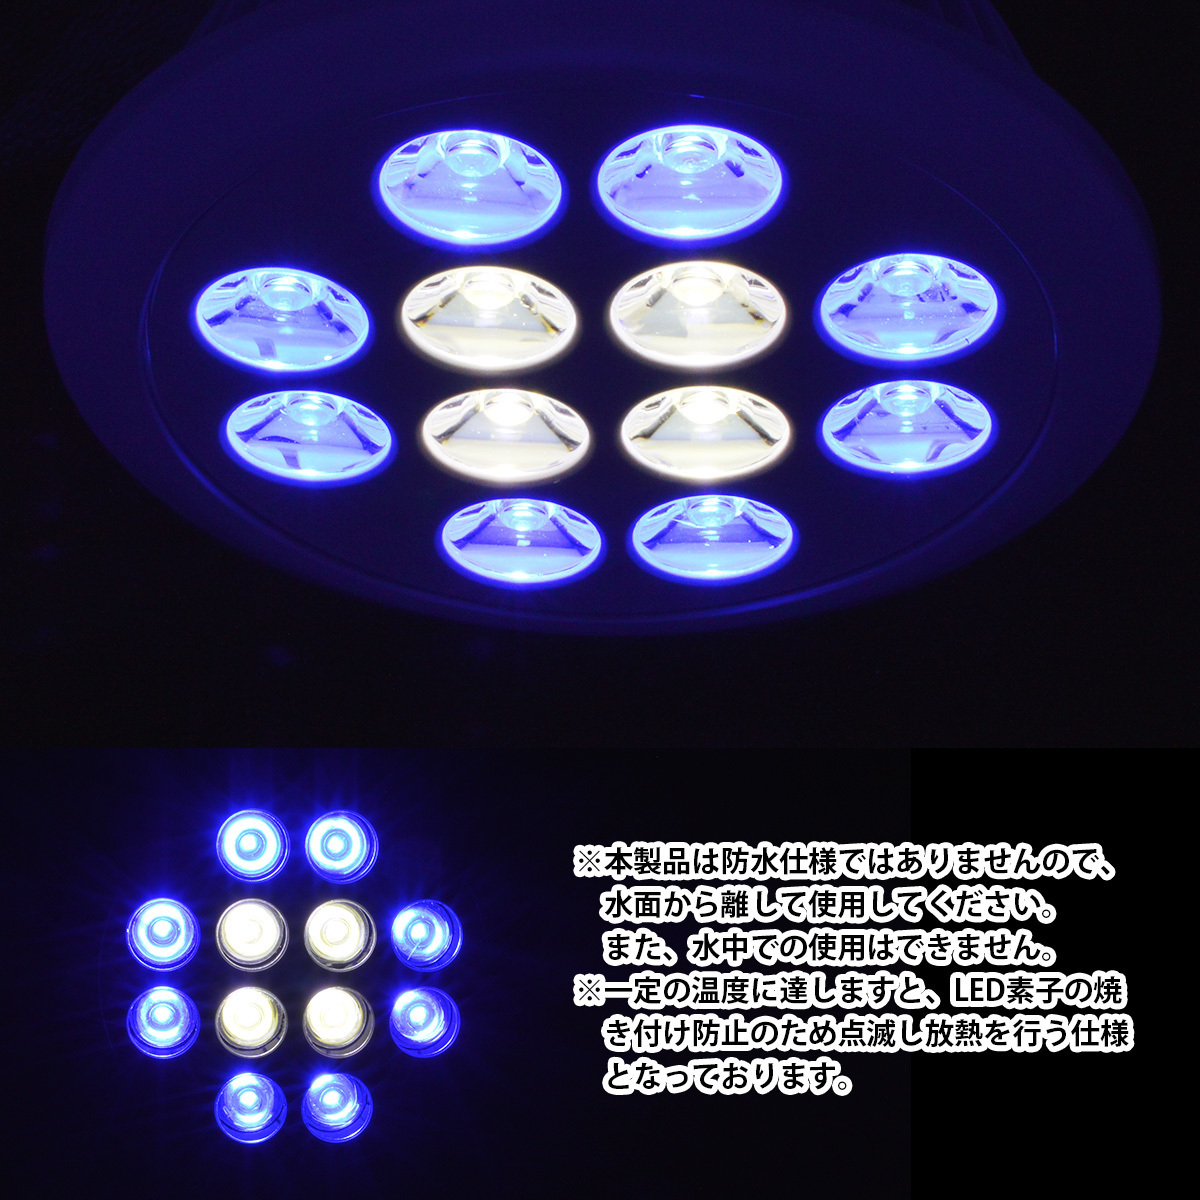 LED 電球 スポットライト 24W(2W×12)青8白4 水槽 照明 E26 水草 LEDスポットライト 電気 水草 サンゴ 熱帯魚 観賞魚 植物育成_画像4